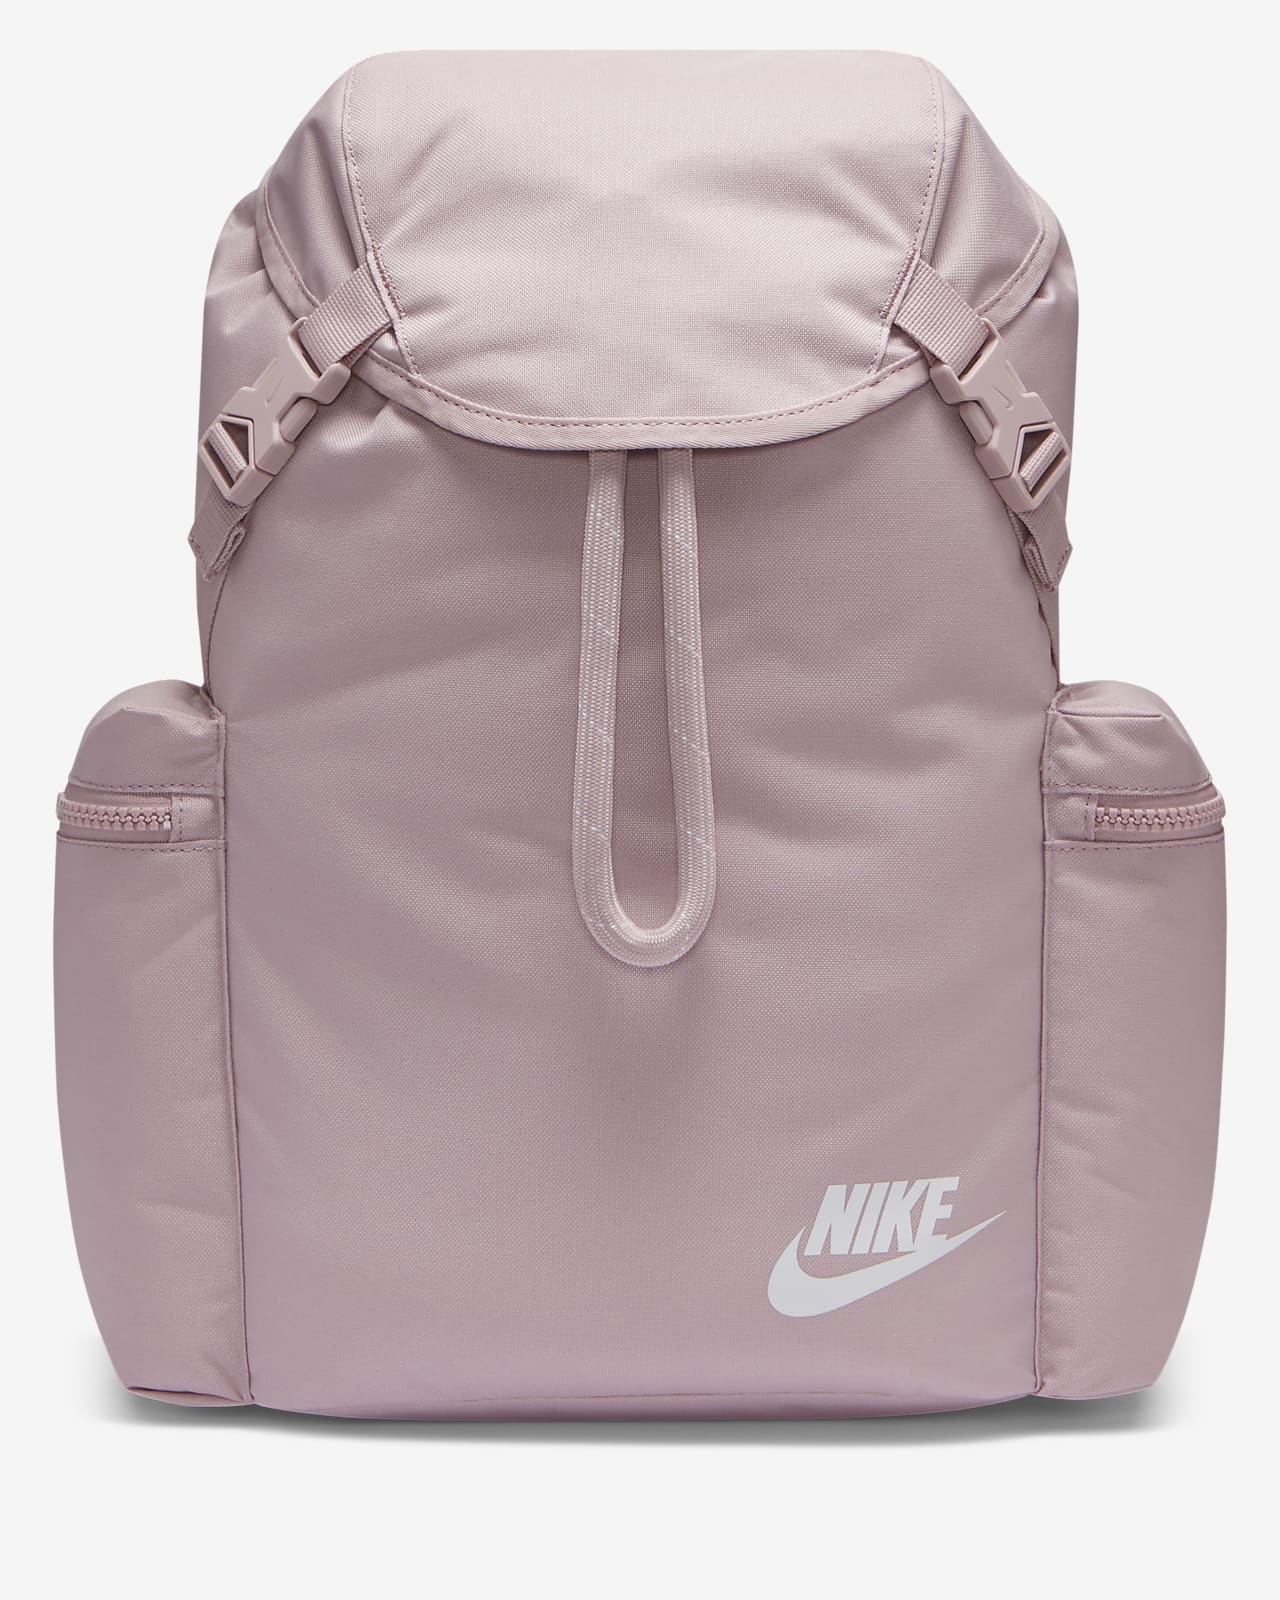 nike heritage backpack pink